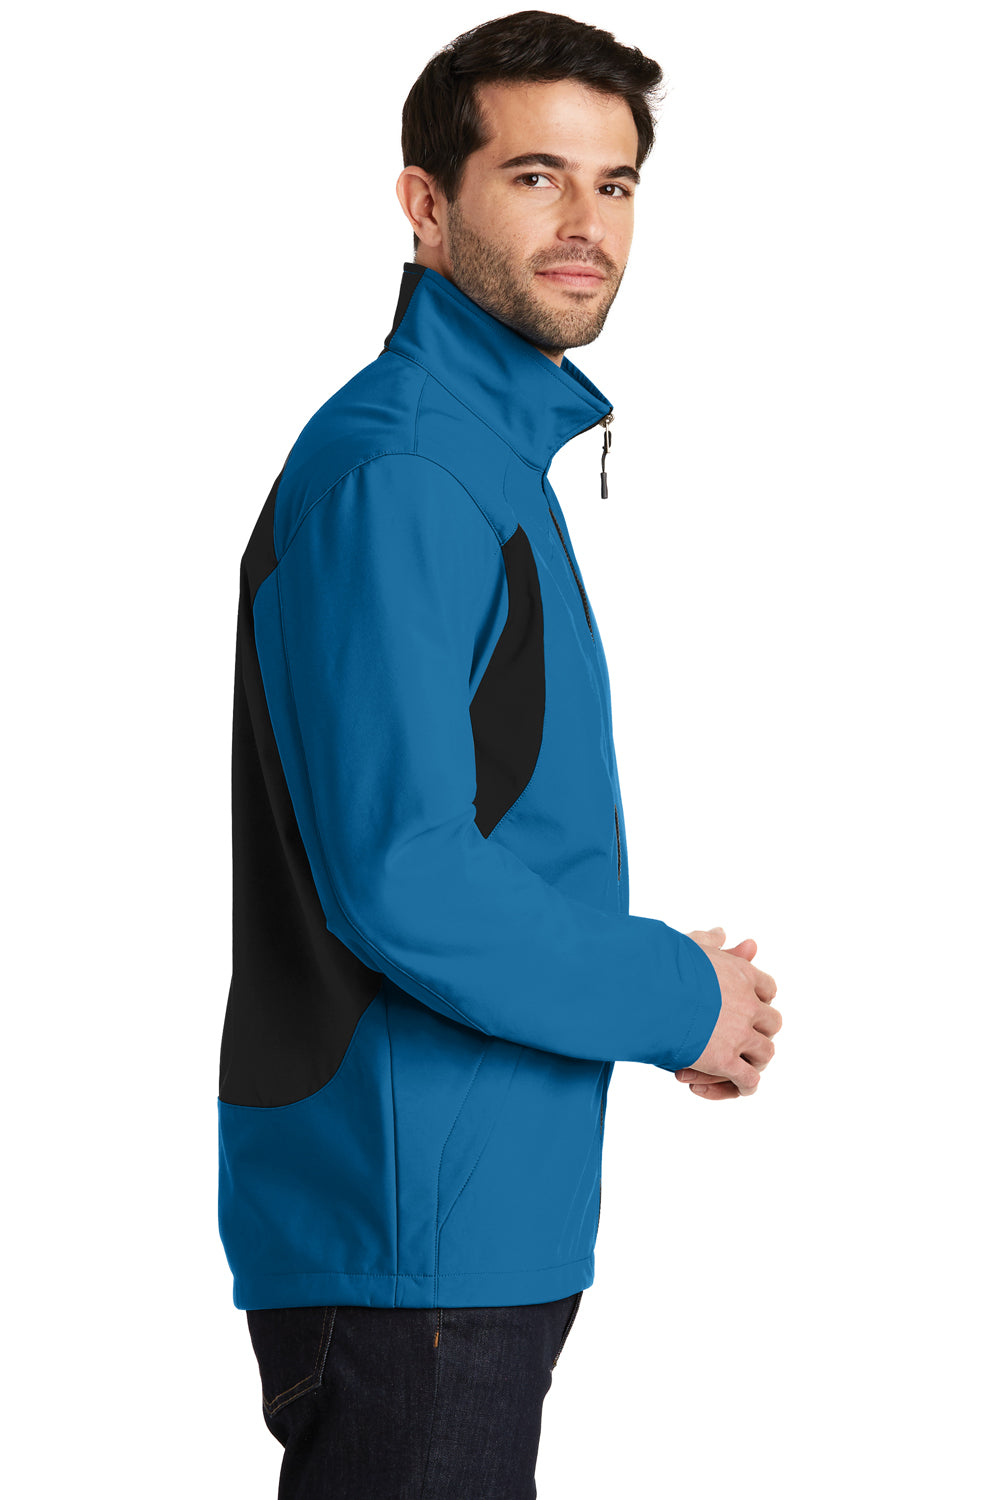 Port Authority J336 Mens Wind & Water Resistant Full Zip Jacket Imperial Blue/Black Side